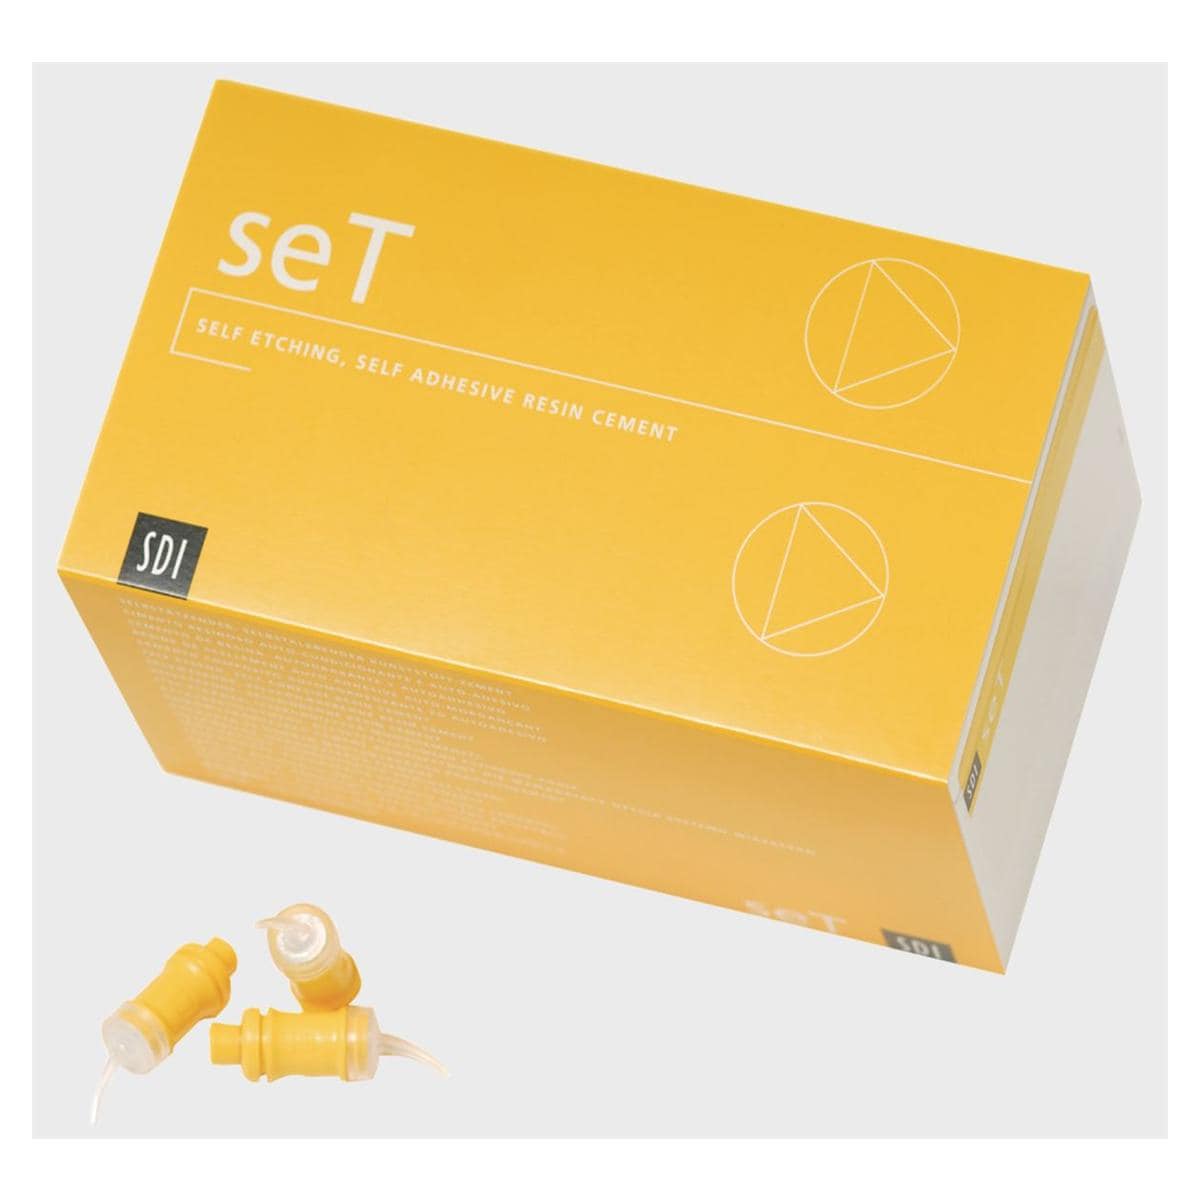 seT Resin Cement Assorted Kit Capsule 50pk - Henry Schein Dental